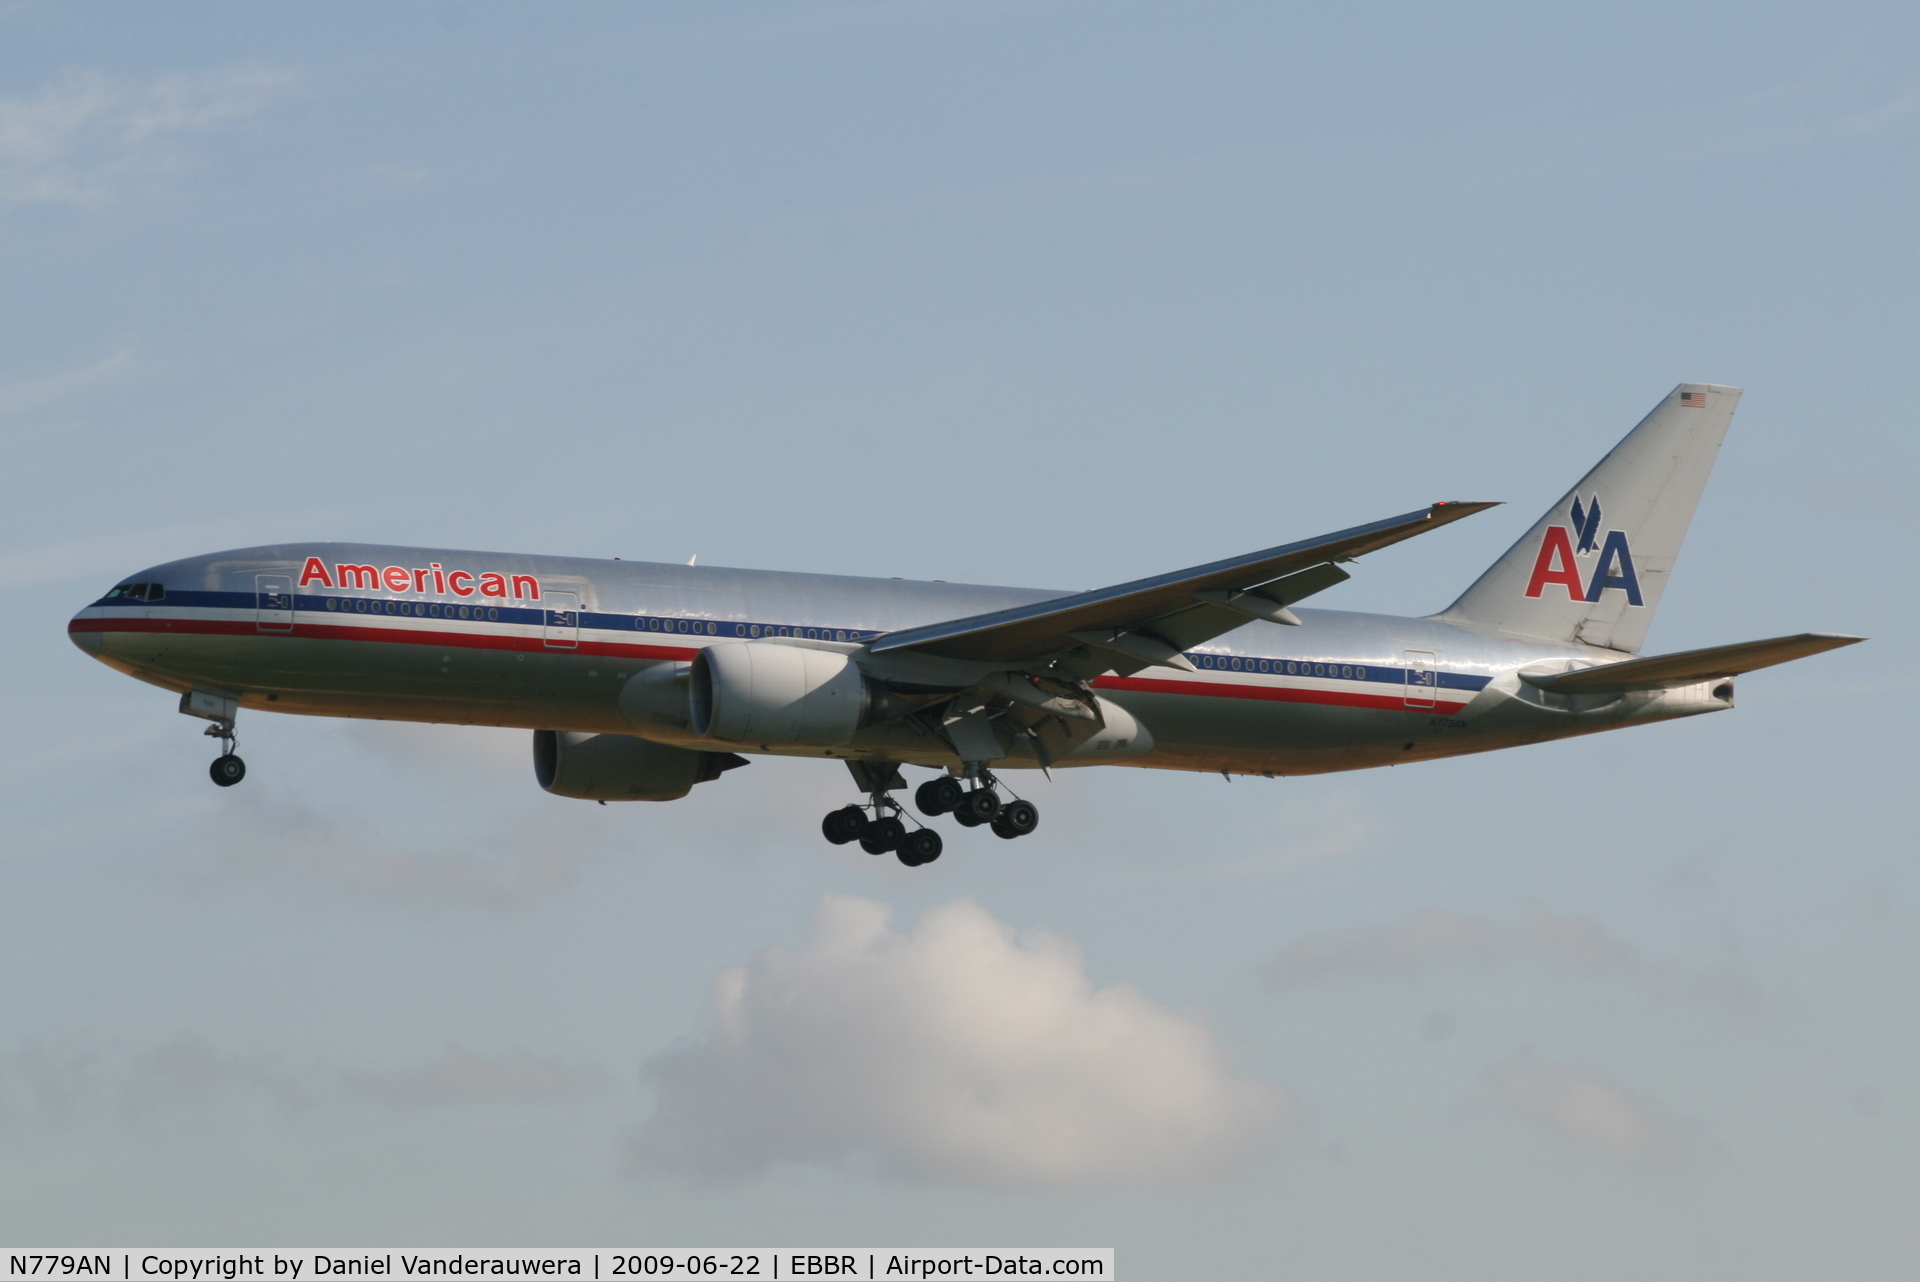 N779AN, 1999 Boeing 777-223 C/N 29955, Arrival of flight AA088 to RWY 25L